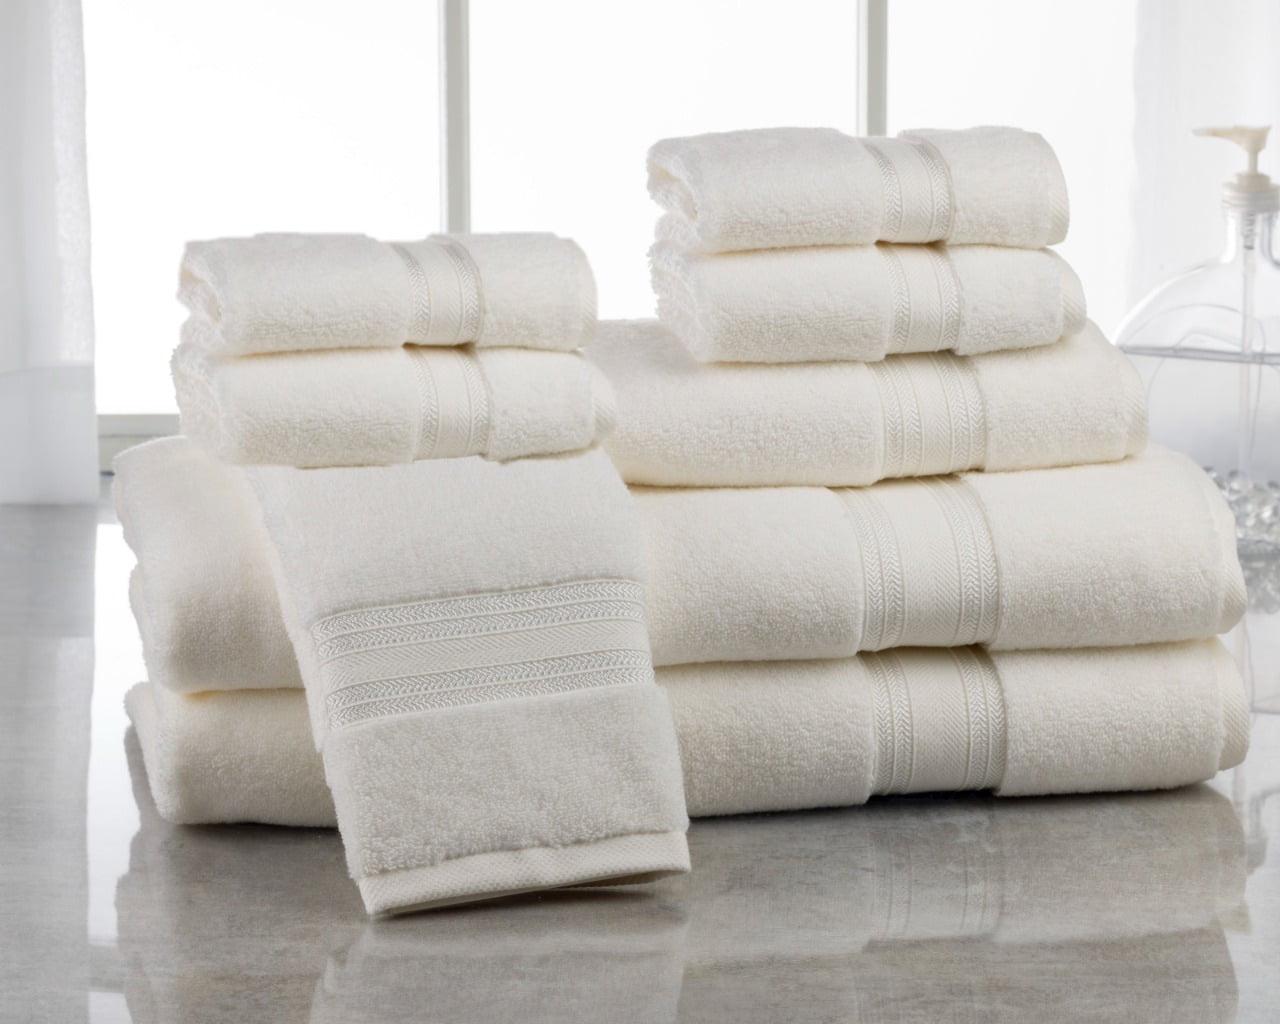  YTYC Towels,29x59 Inch Extra Large Bath Towels Sets